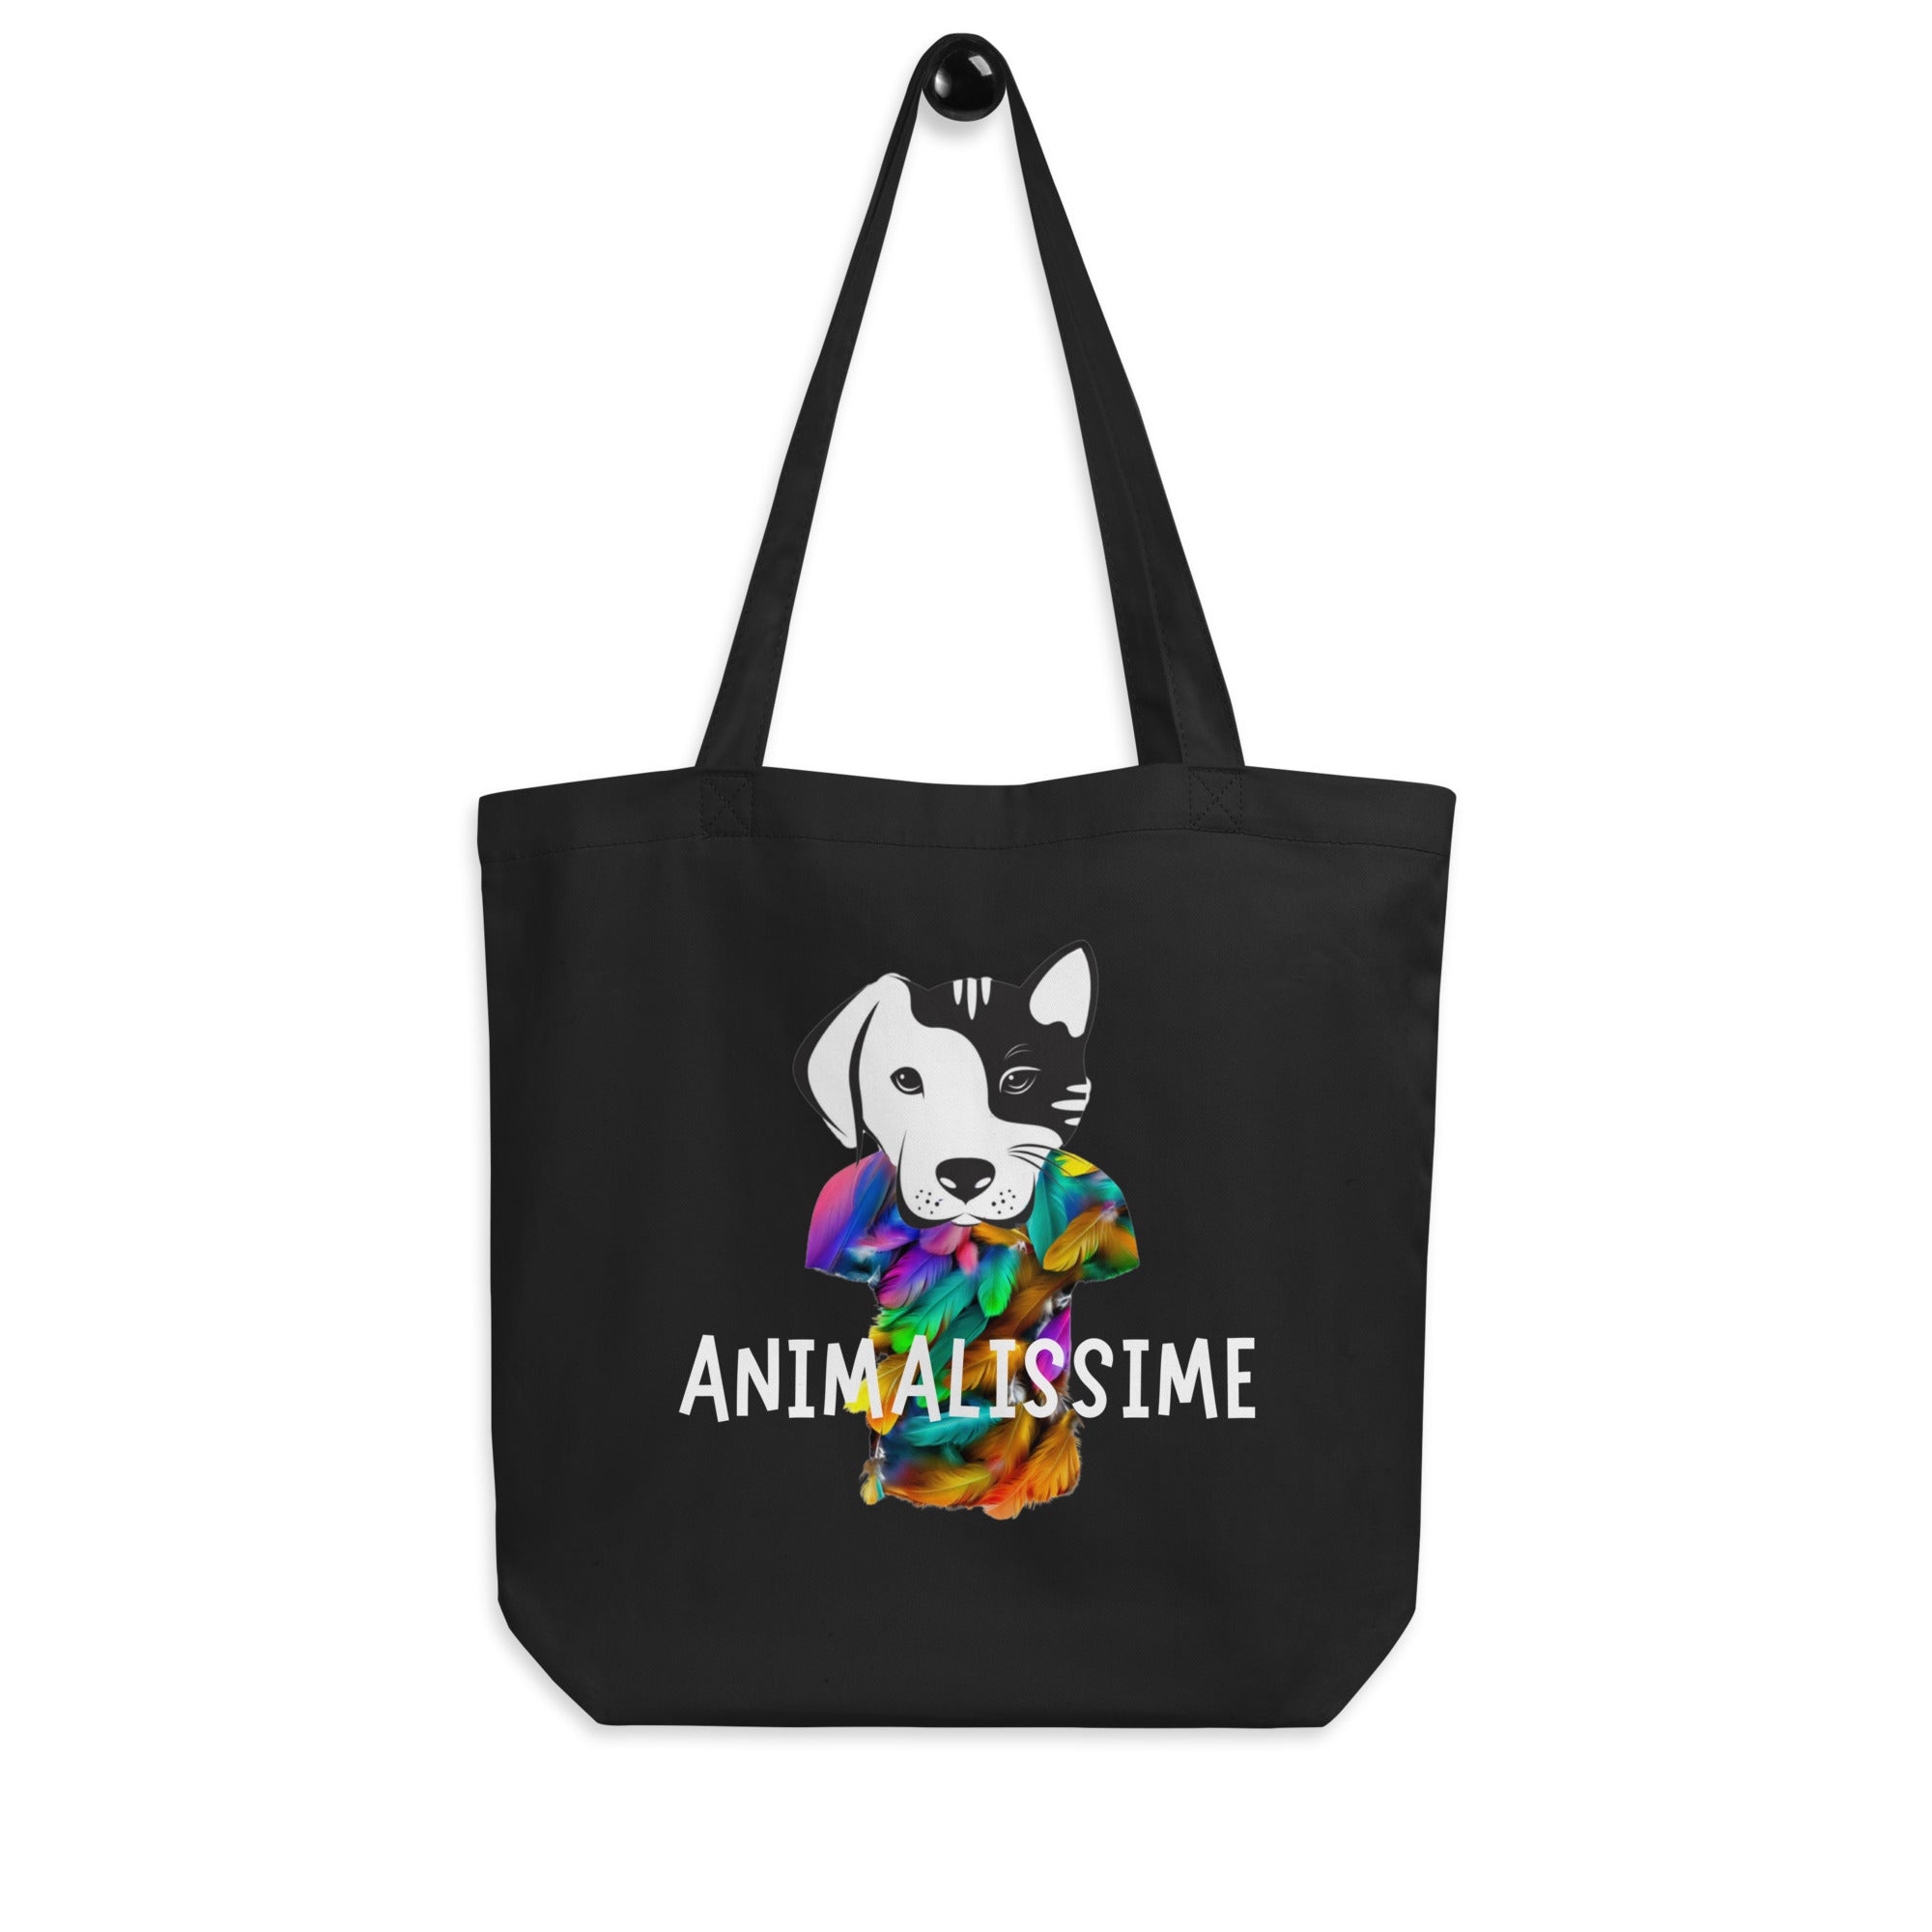 Animalissime - Tote Bag Bio